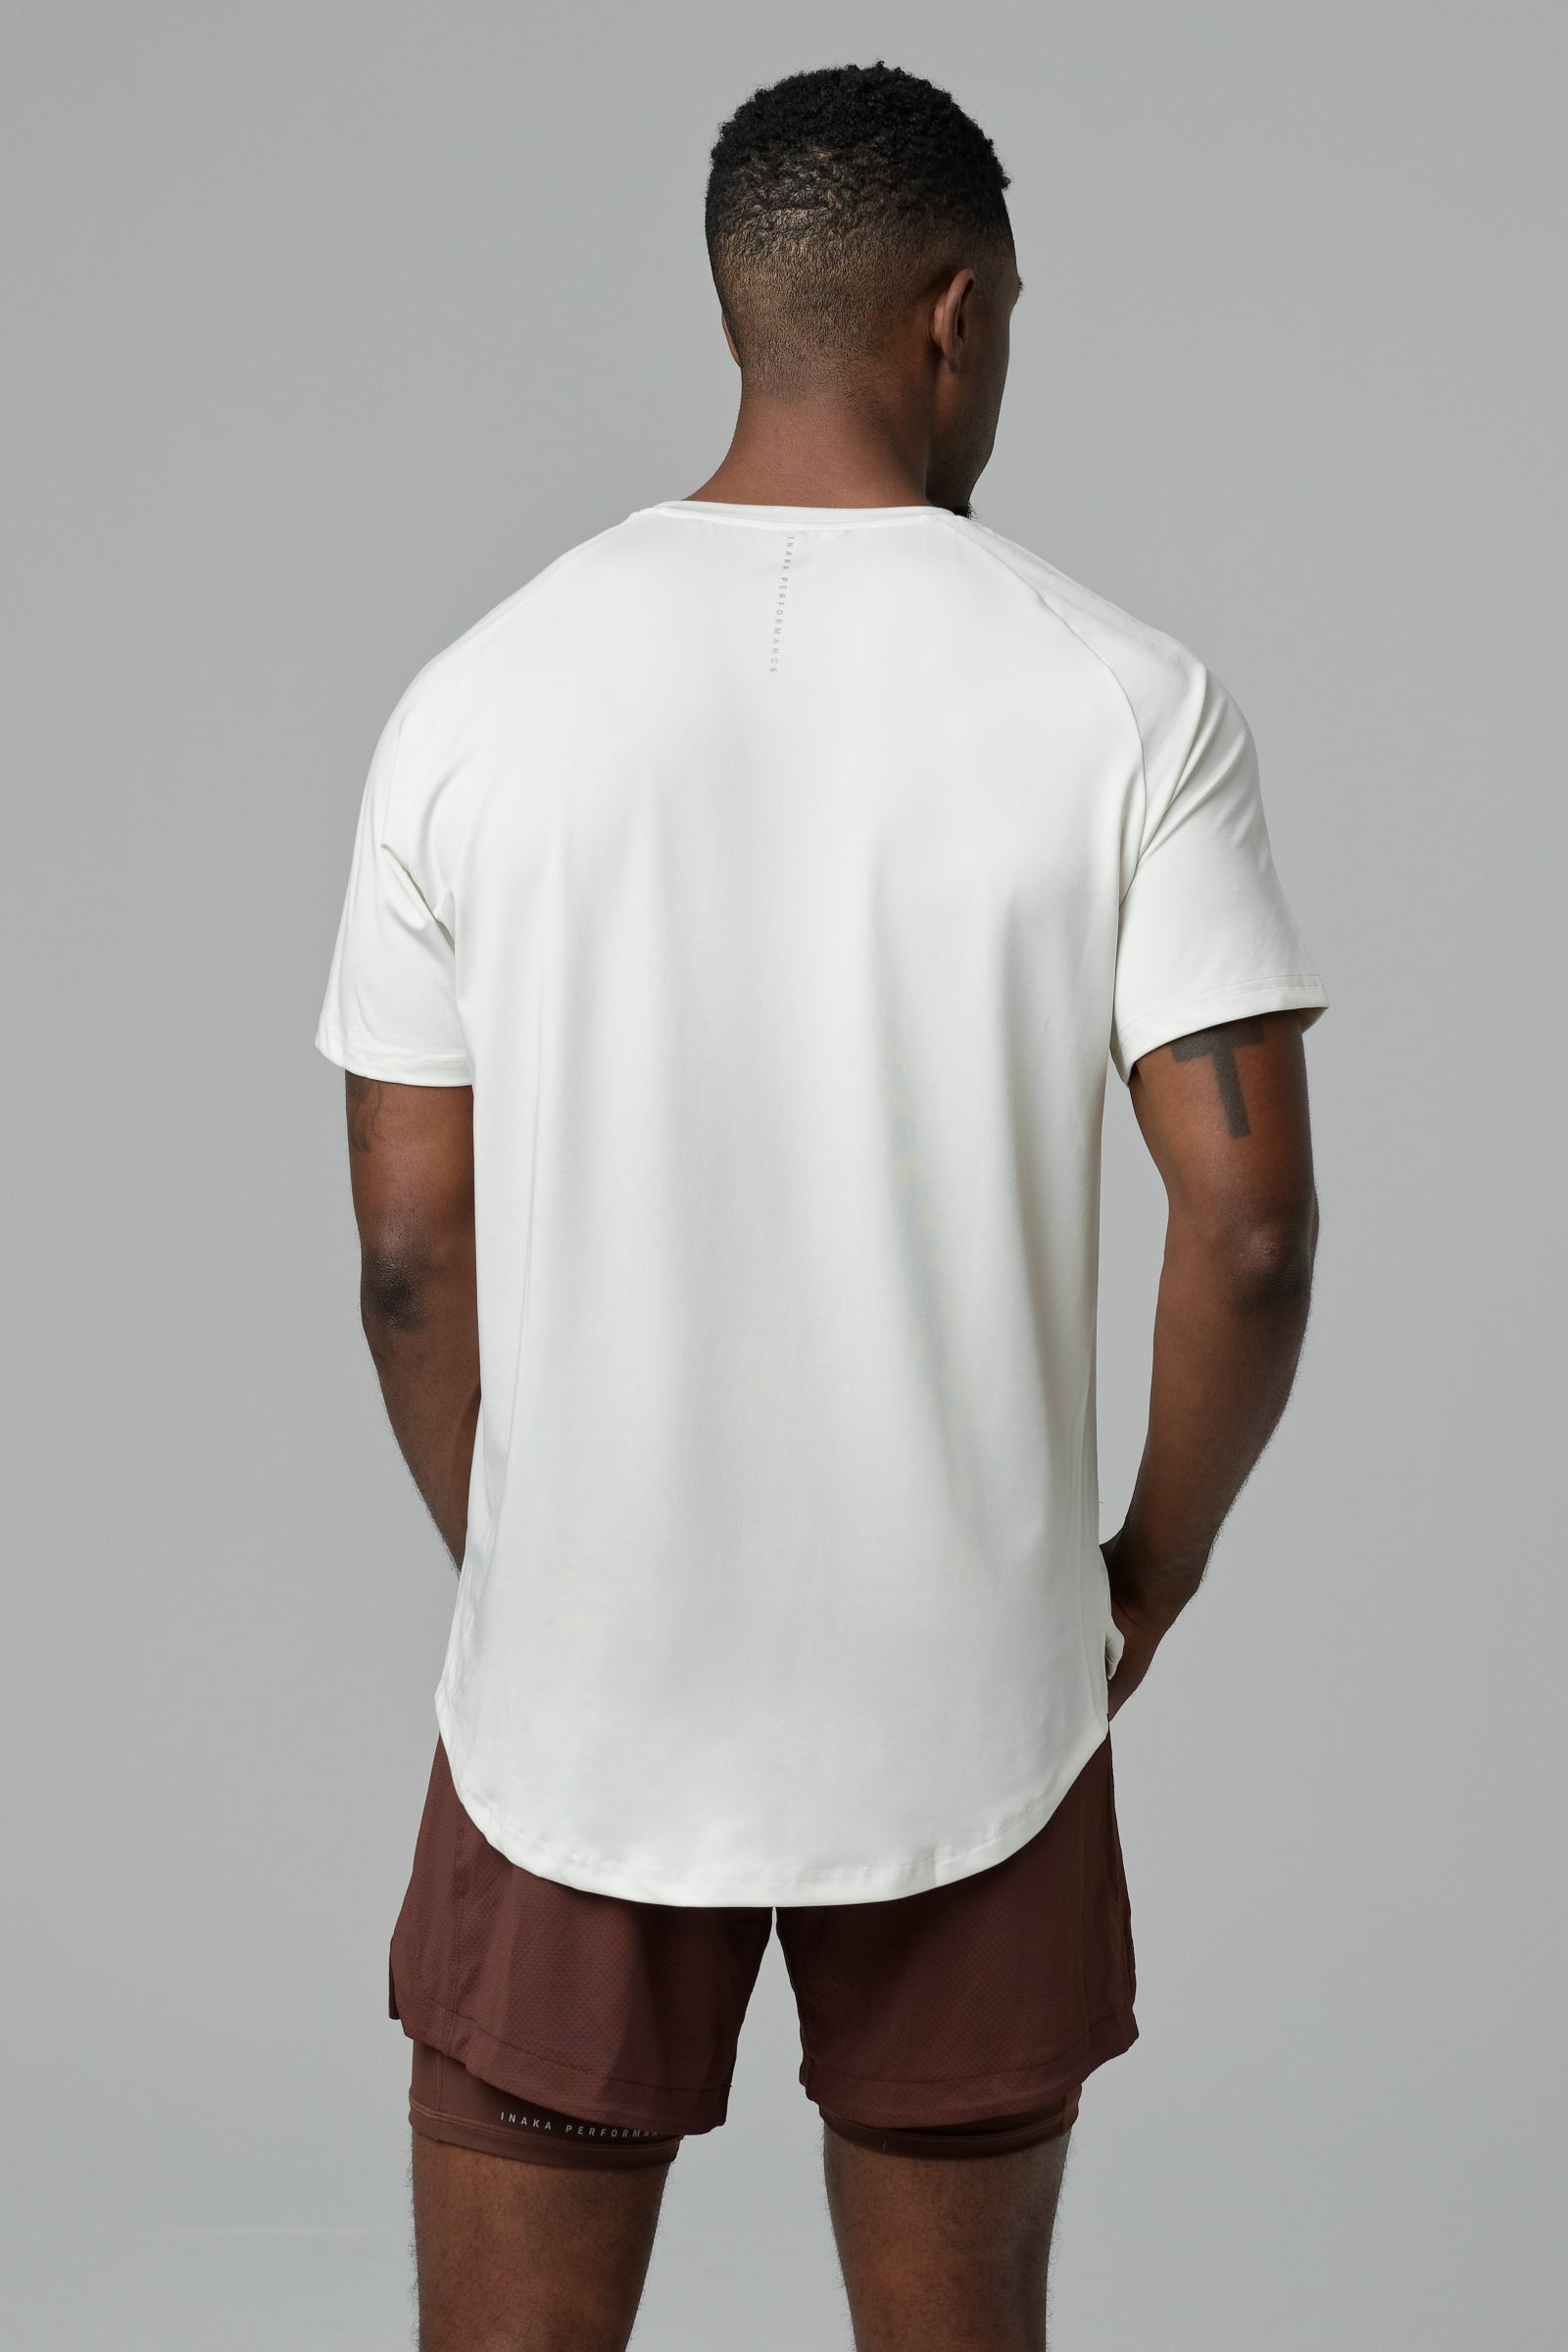 YoungLA Men's Short Sleeve Compression Shirt, Palestine